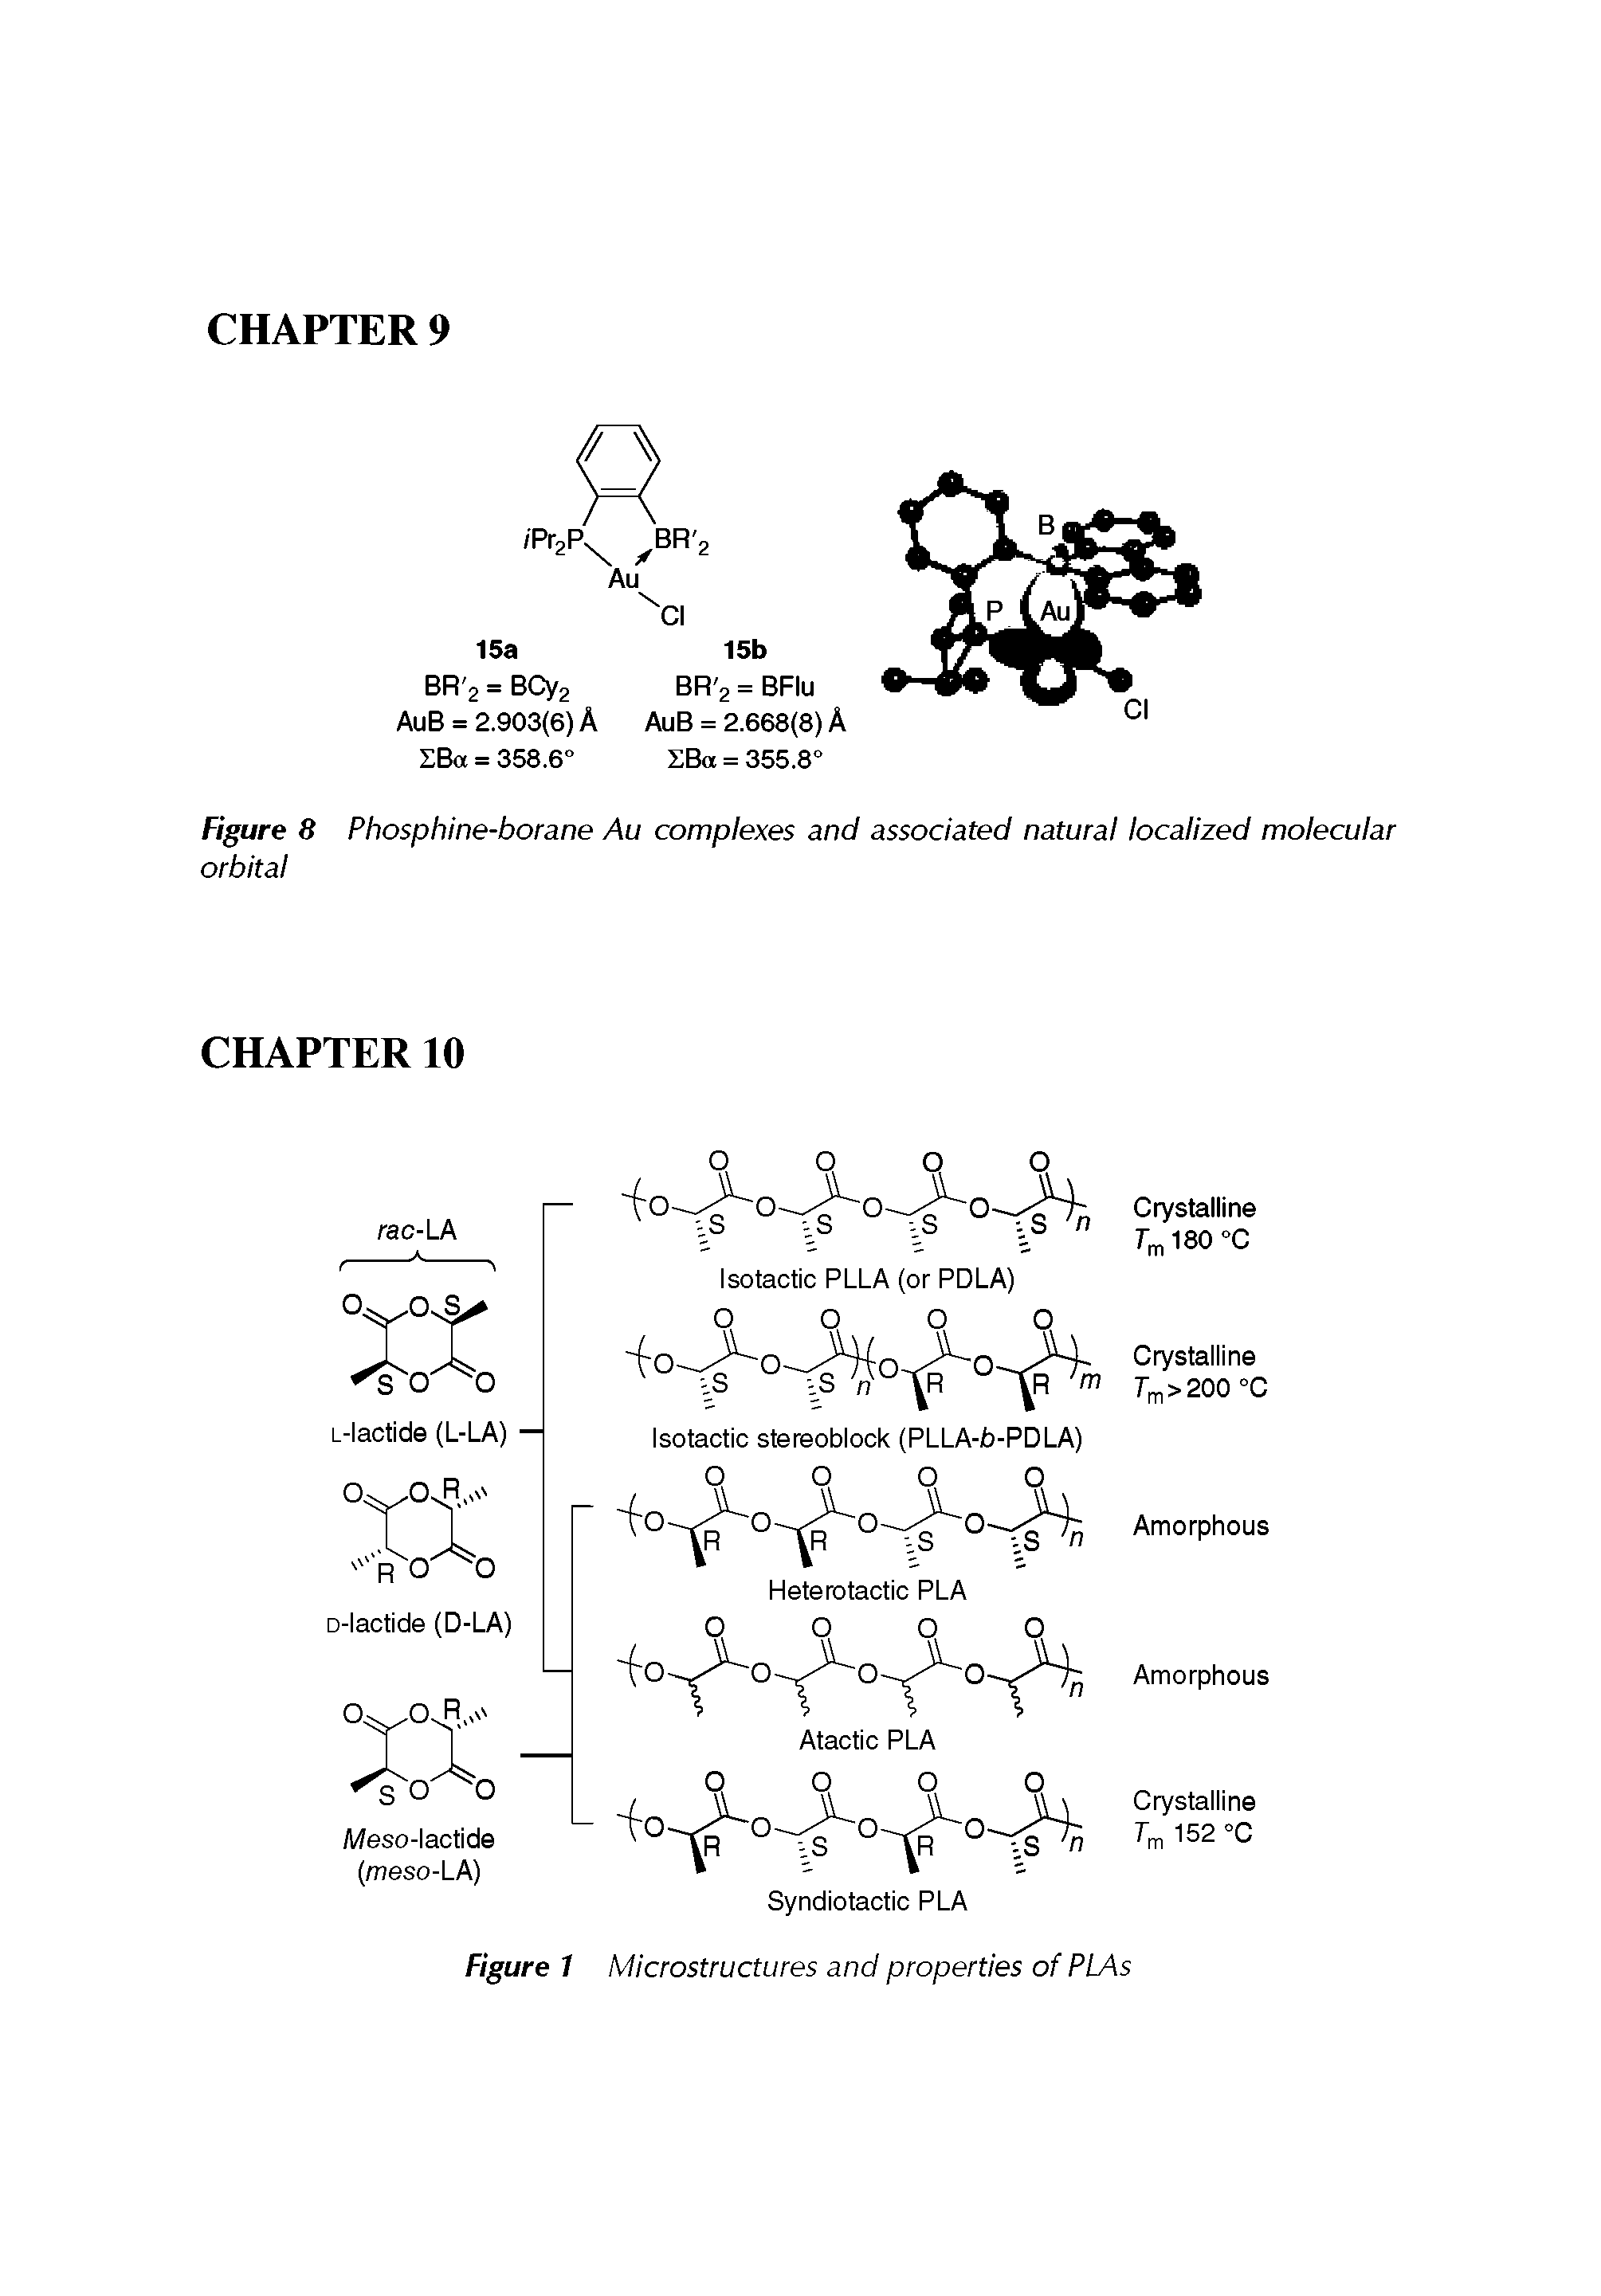 Figure 8 Phosphine-borane Au complexes and associated natural localized molecular orbital...